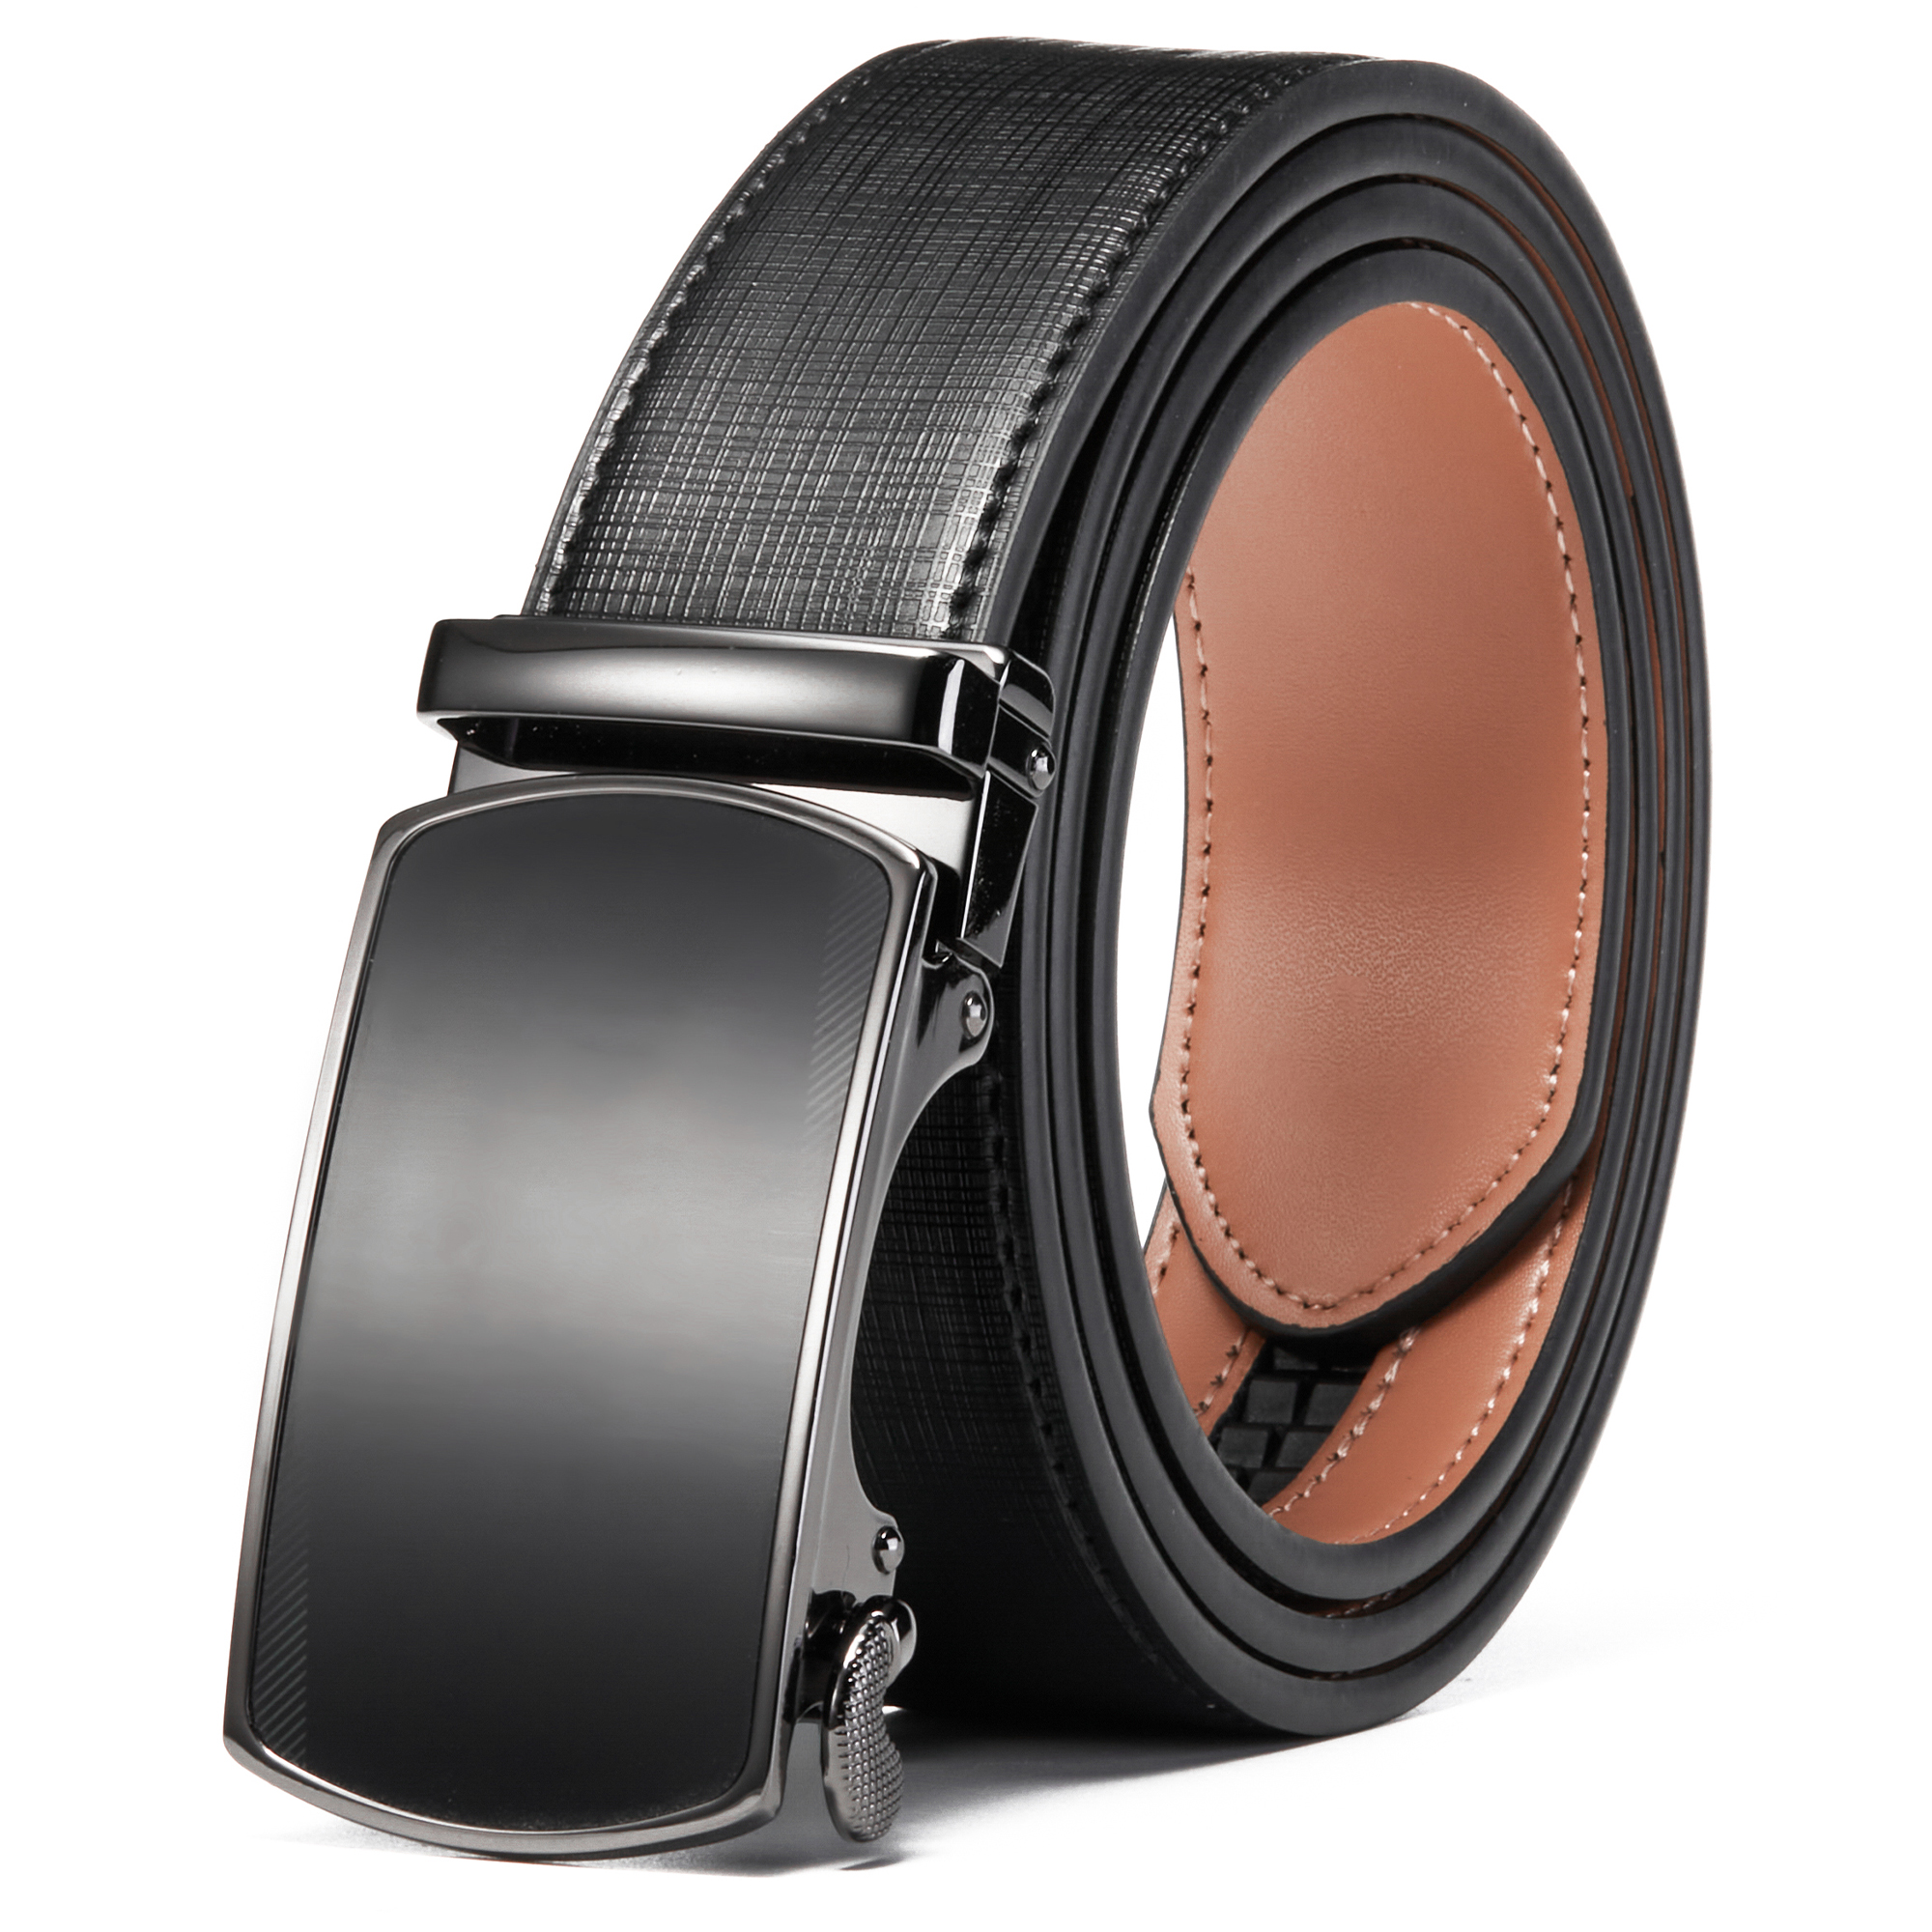 1 3/8 Wide Black/White/Brown CLUBBELTS Mens Leather Ratchet Belt with Automatic Buckle Adjustable Dress Belt for Men